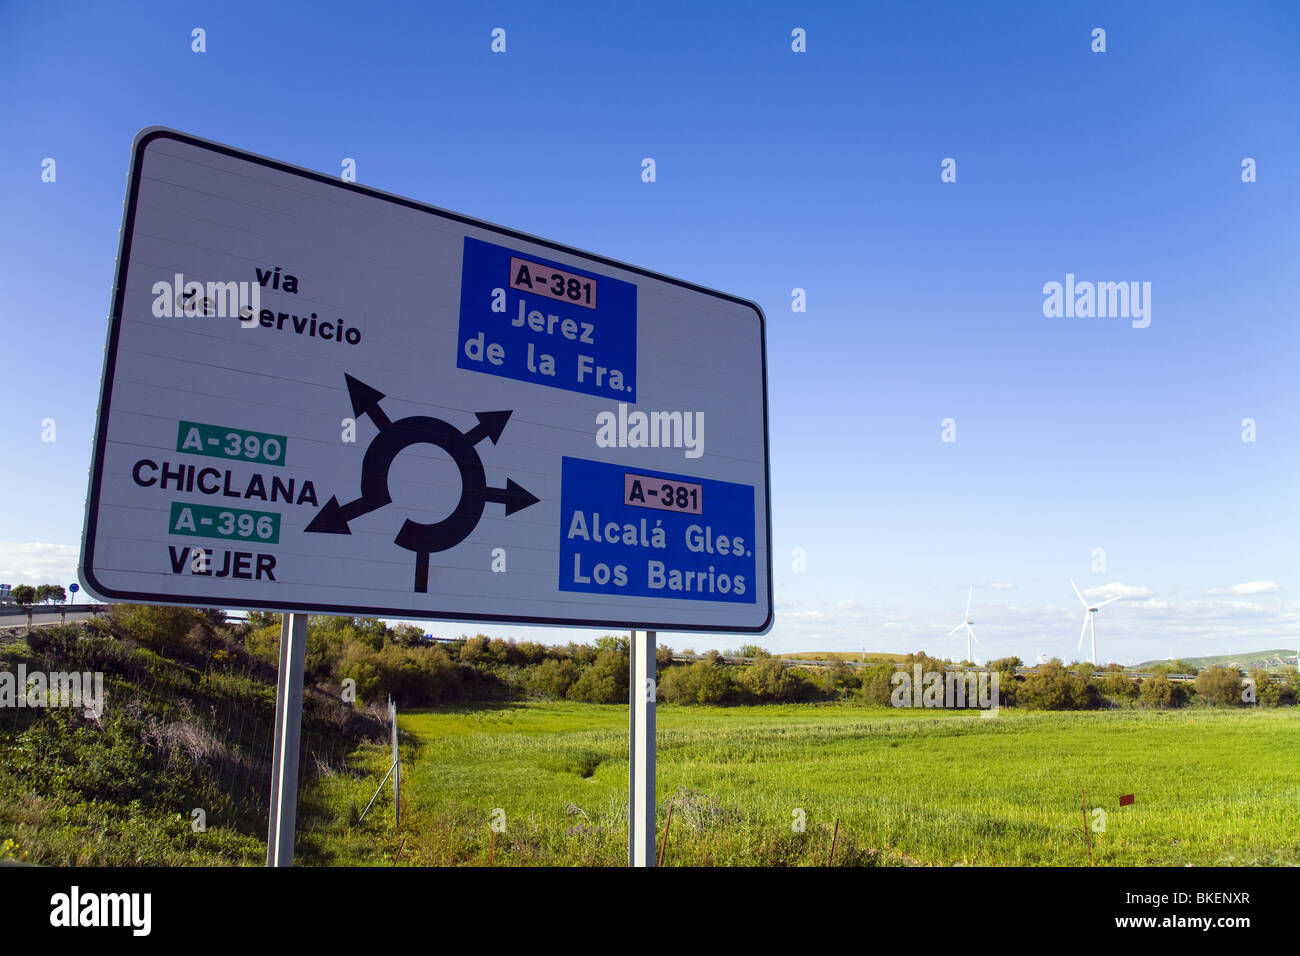 Road sign showing directions in medina sidonia cadiz (Spain) Stock Photo